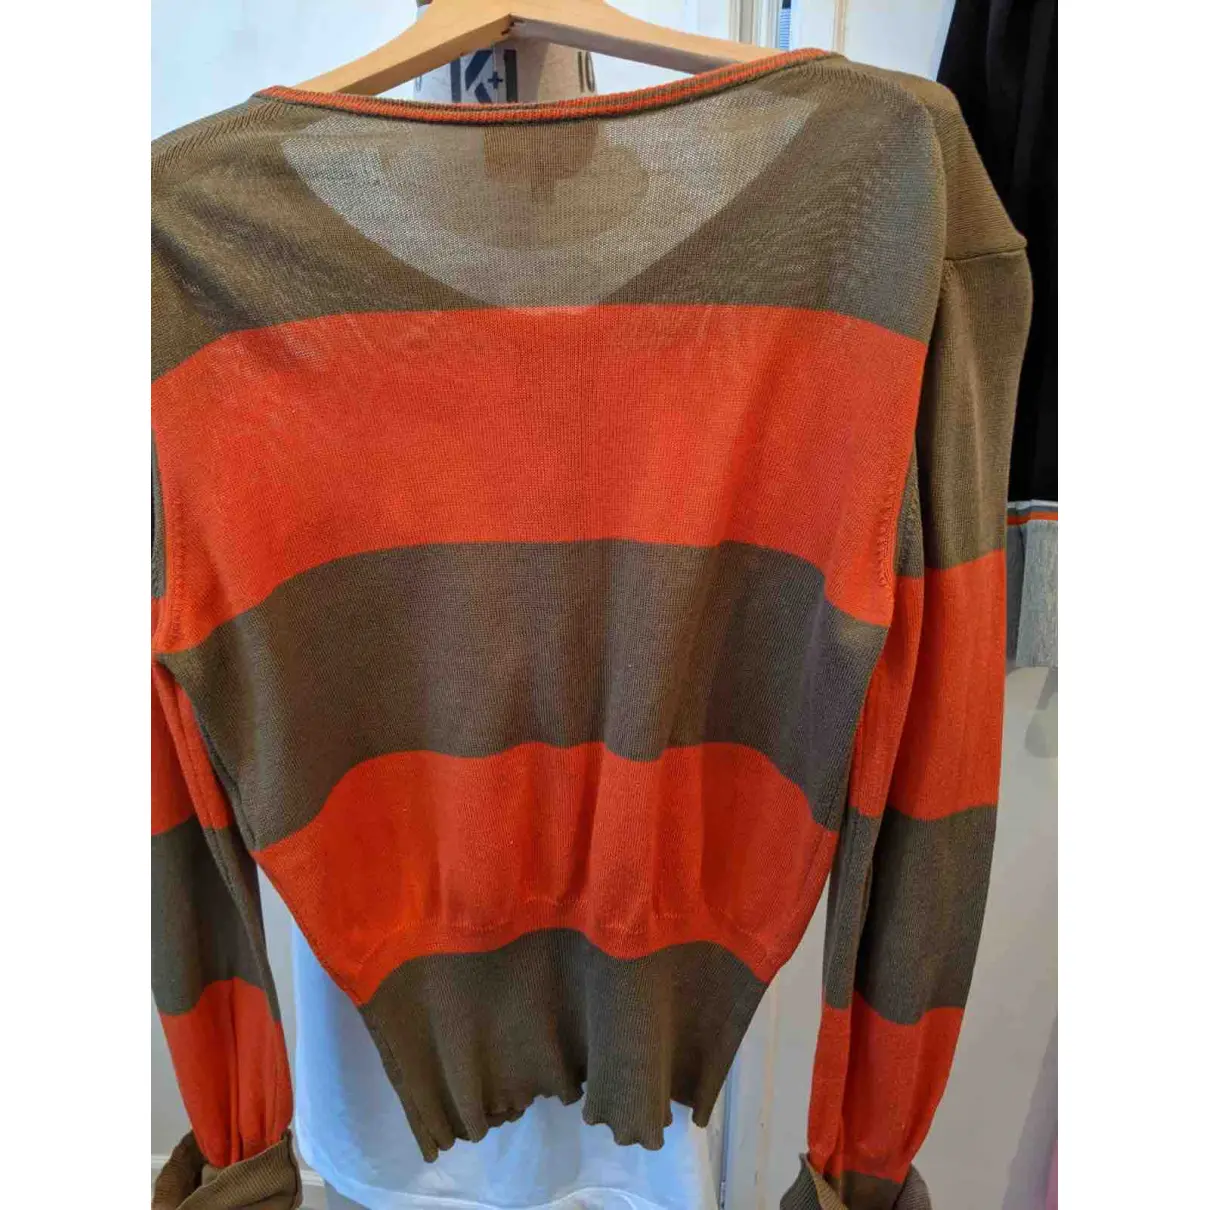 Buy Vivienne Westwood Red Label Orange Cotton Knitwear online